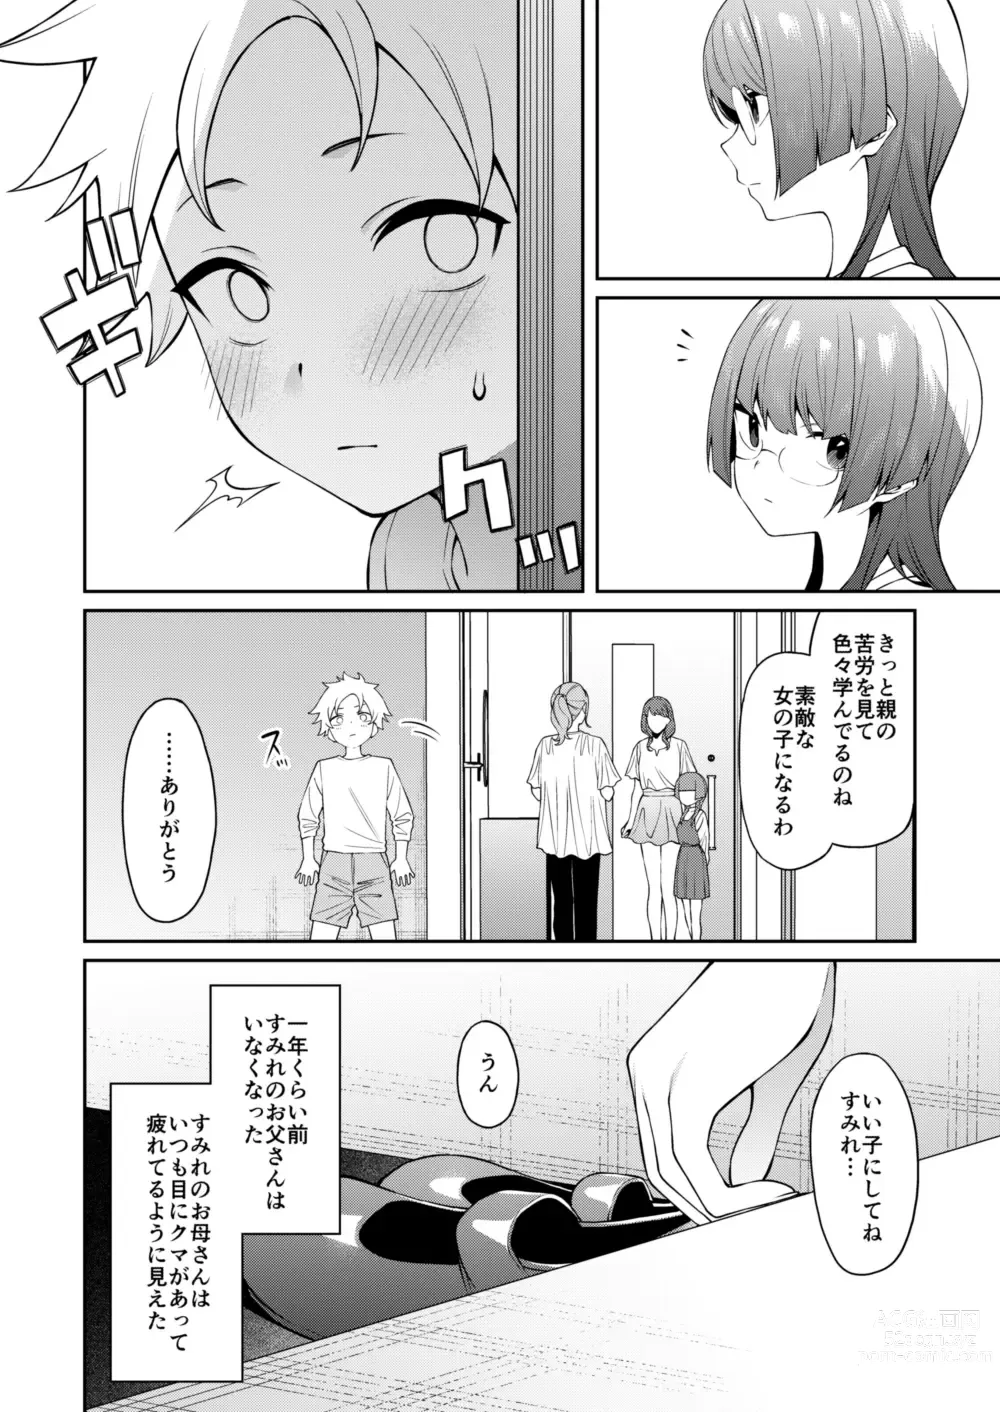 Page 11 of doujinshi Sumire-chan ha atama ga ii.